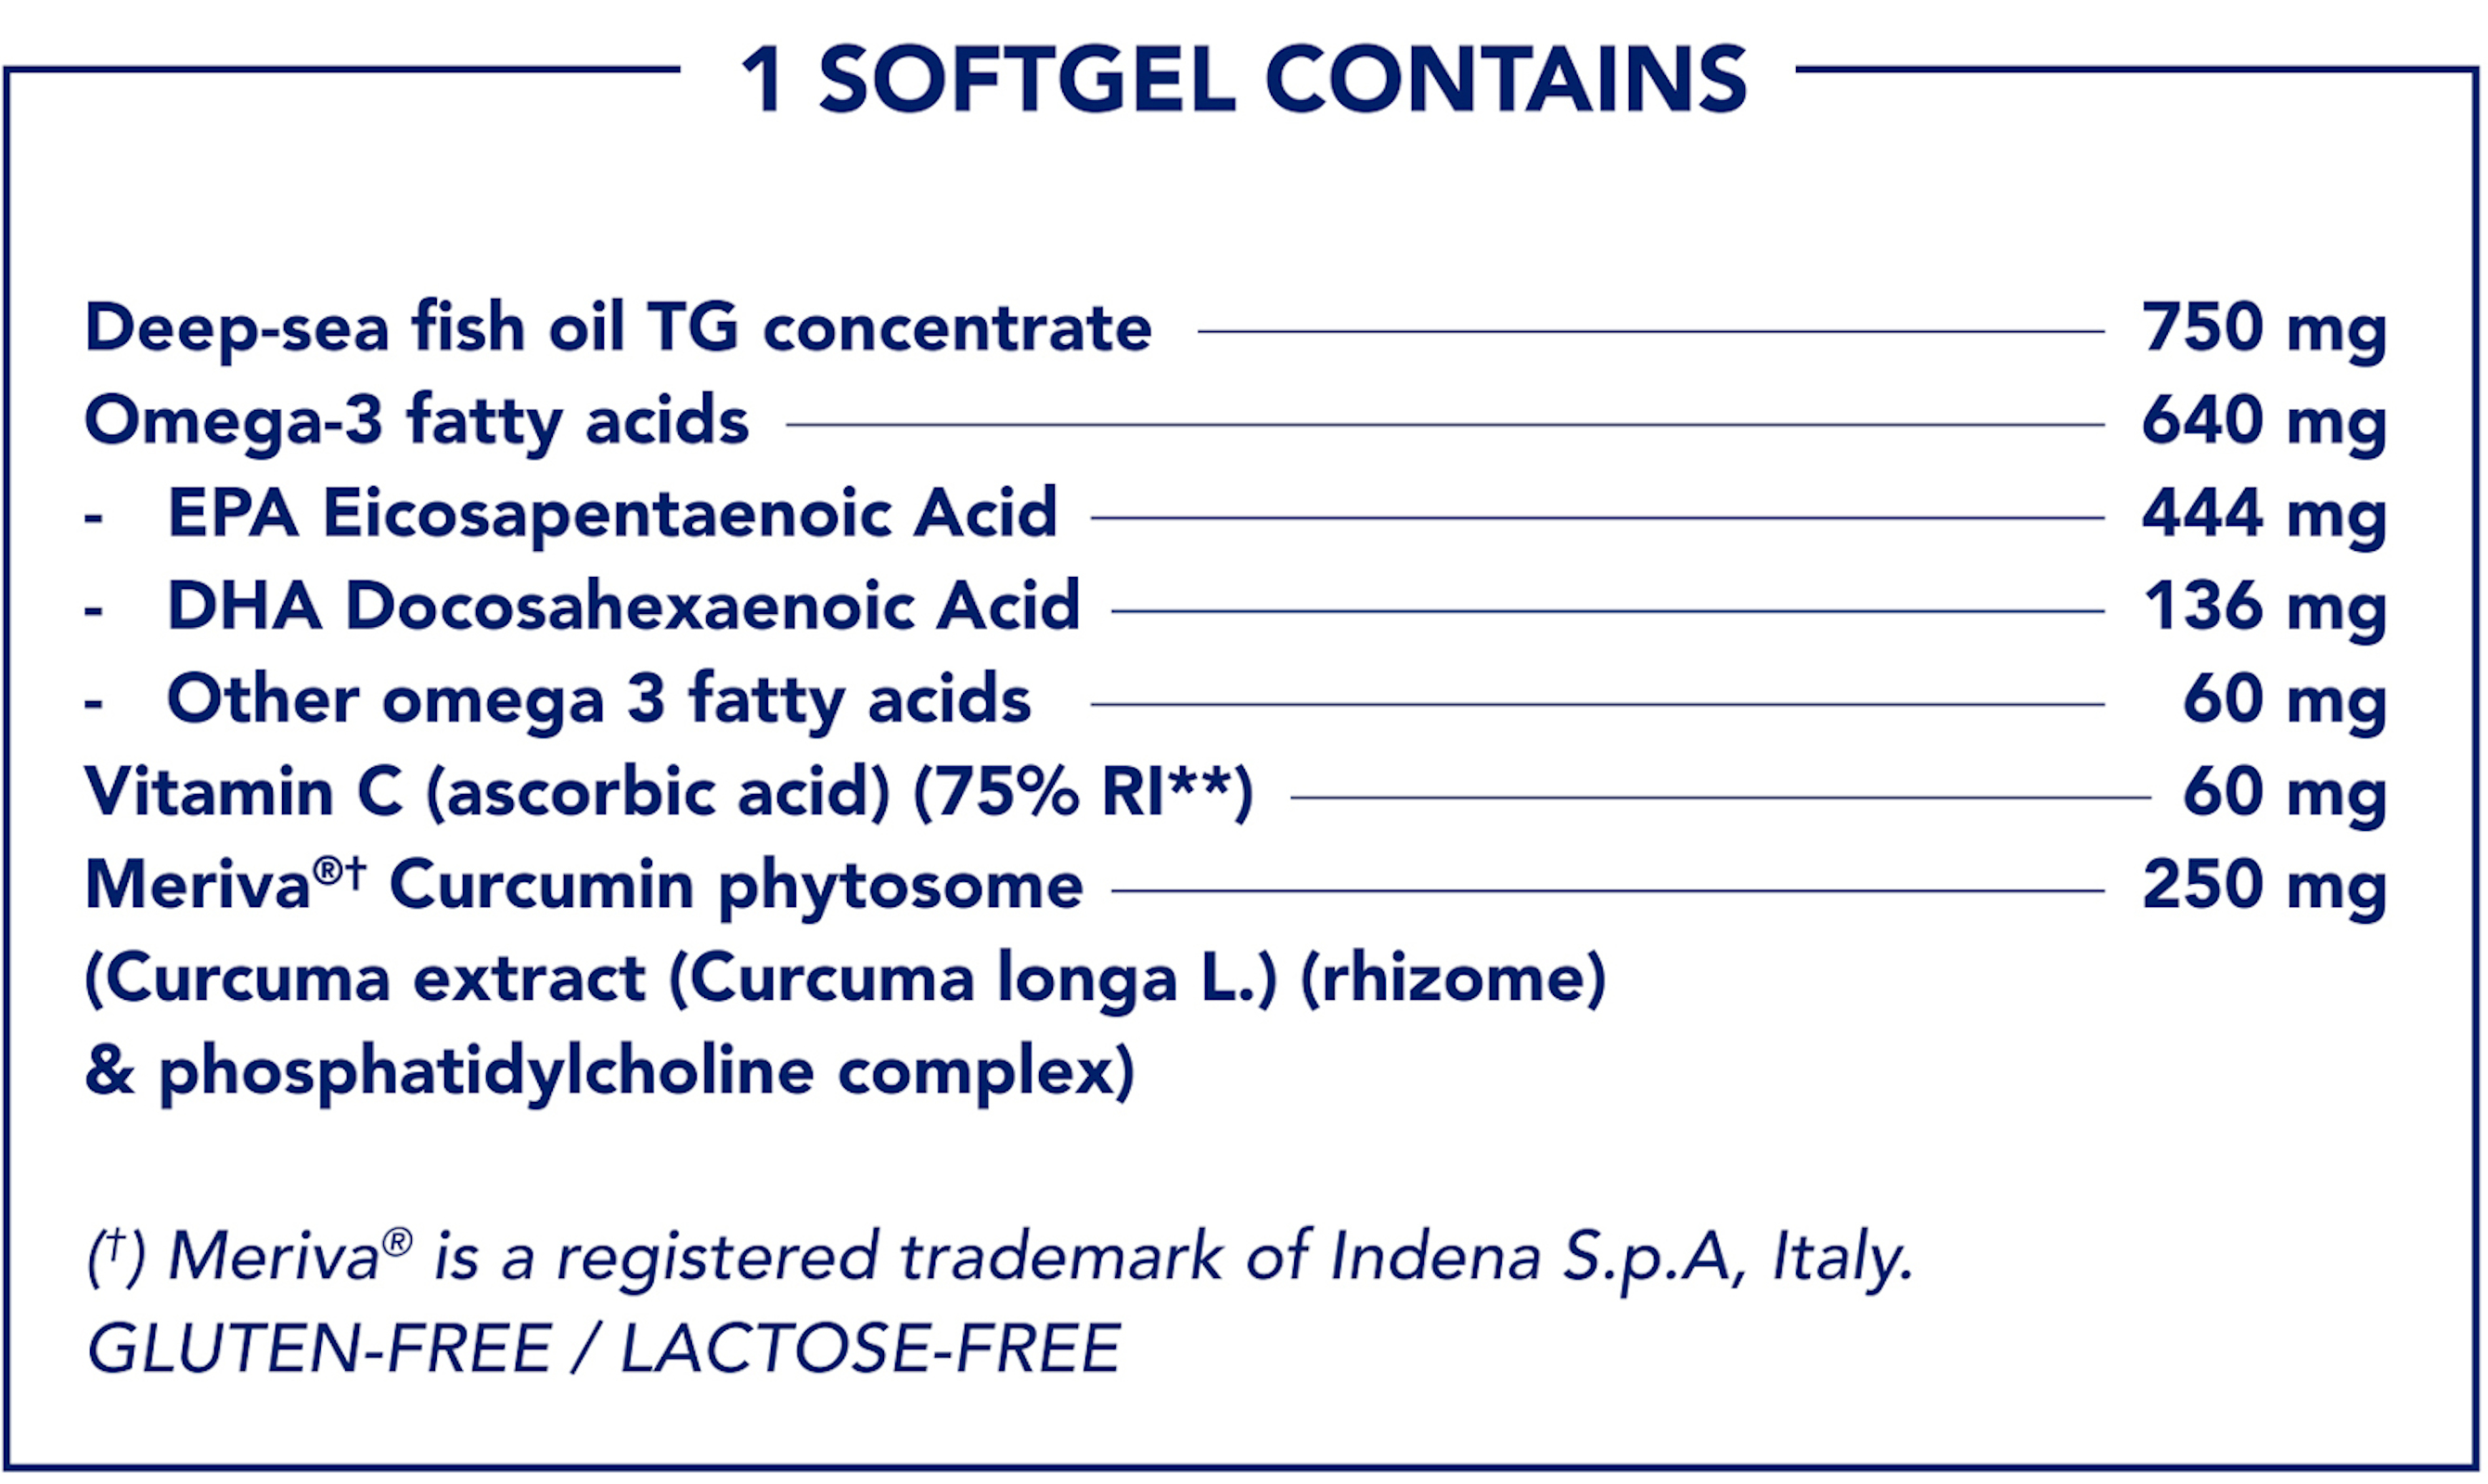 1 SOFTGEL CONTAINSDeep-sea fish oil TG concentrate 750 mgOmega-3 fatty acids 640 mgEPA Eicosapentaenoic Acid 444 mgDHA Docosahexaenoic Acid 136 mgOther omega 3 fatty acids 60 mgVitamin C (ascorbic acid) (75% RI**) 60 mgMerivaⓇ+ Curcumin phytosome 250 mg(Curcuma extract (Curcuma longa L.) (rhizome) & phosphatidylcholine complex)(¹) Meriva® is a registered trademark of Indena S.p.A, Italy.GLUTEN-FREE/ LACTOSE-FREE